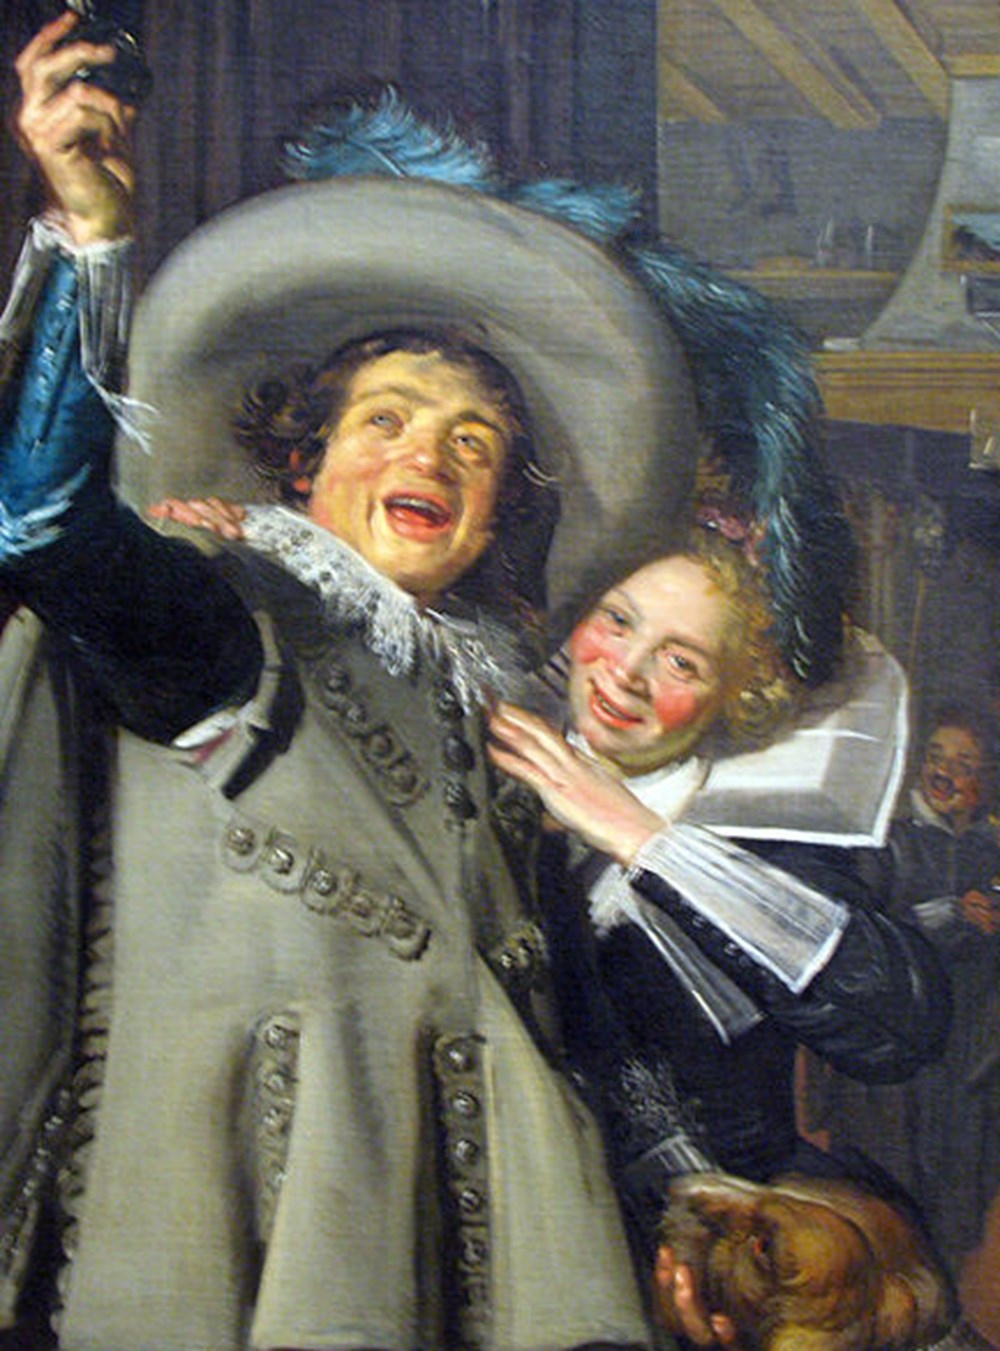 Hollanda'da ressam Frans Hals'a ait İki gülen çocuk tablosu 3. defa çalındı - 4